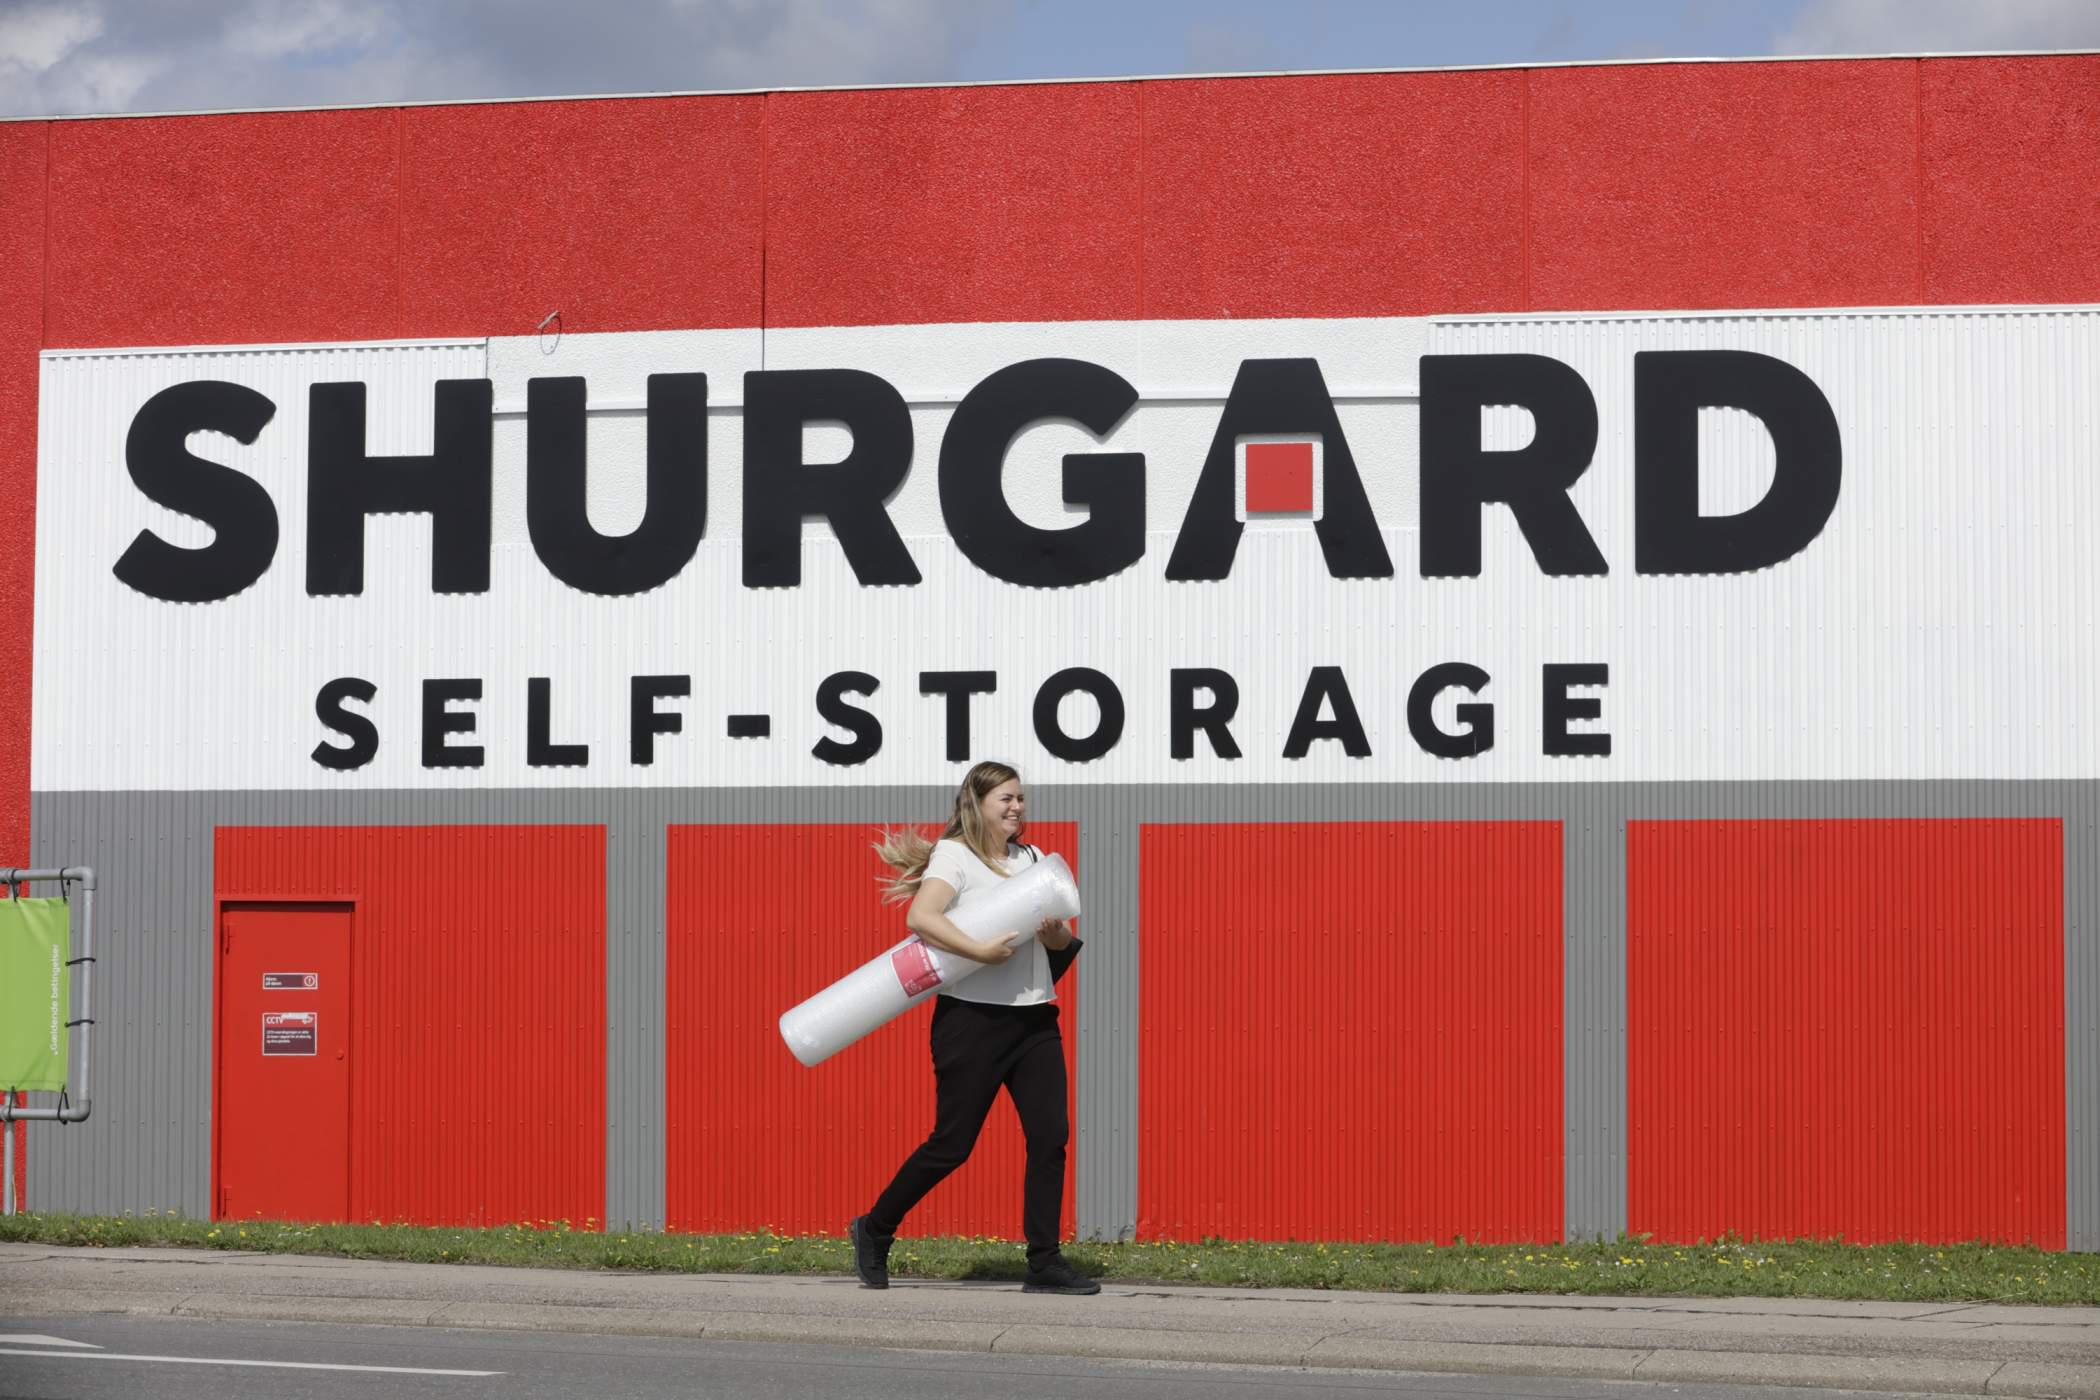 Images Shurgard Self Storage Ishøj